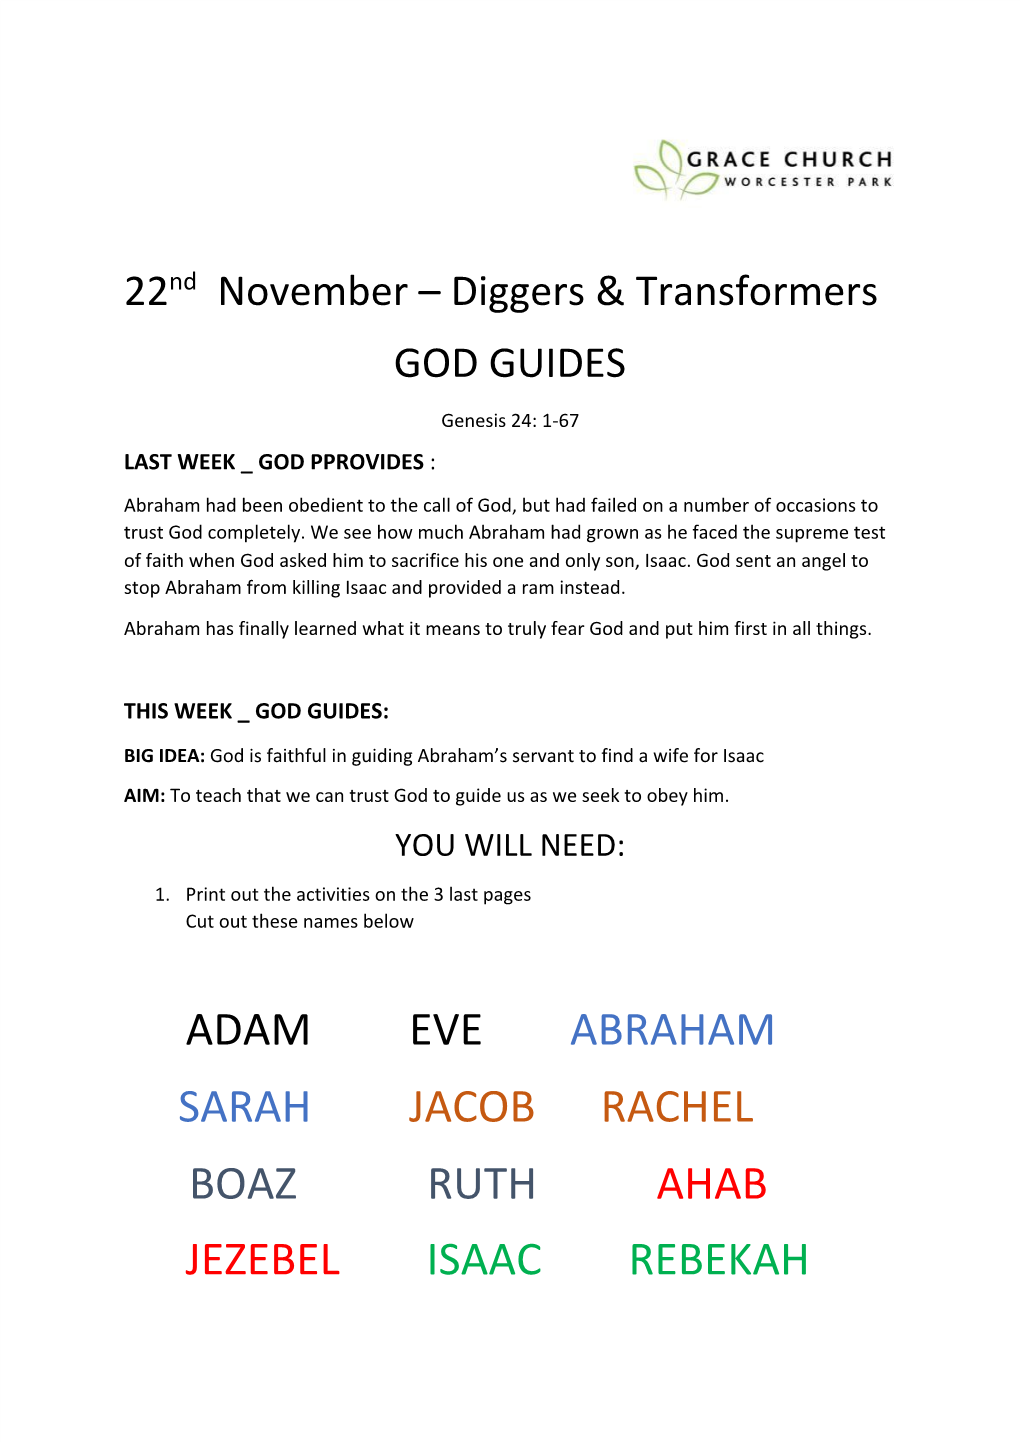 Adam Eve ​Abraham Sarah​ ​Jacob Rachel Boaz Ruth